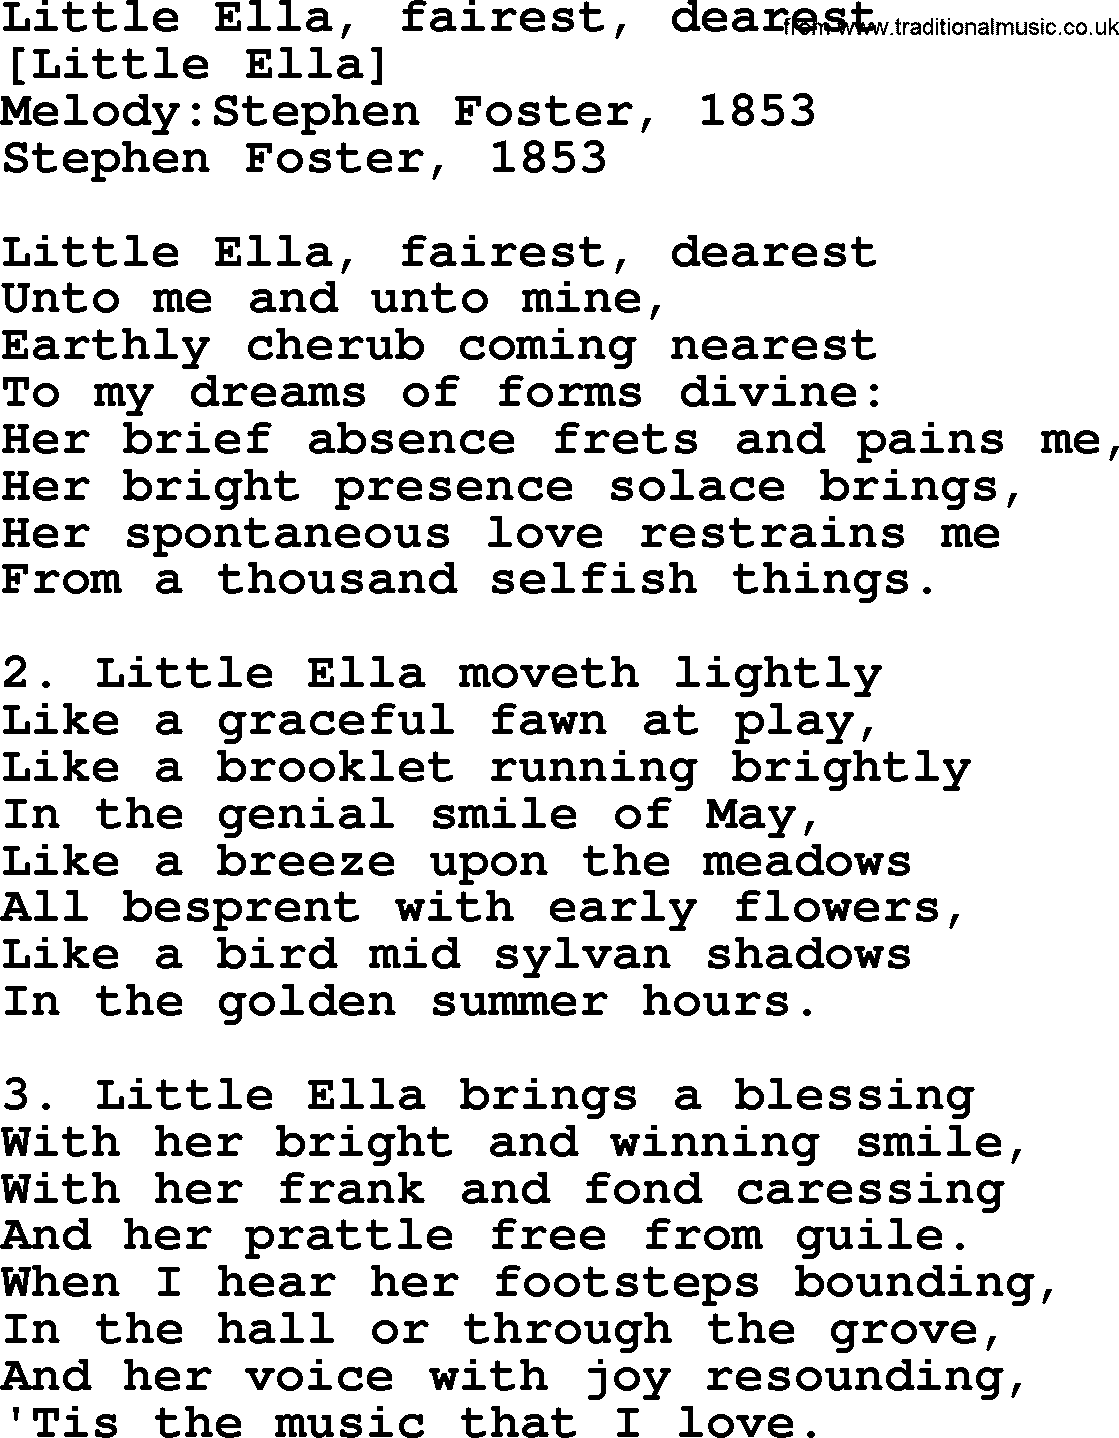 Old American Song: Little Ella, Fairest, Dearest, lyrics